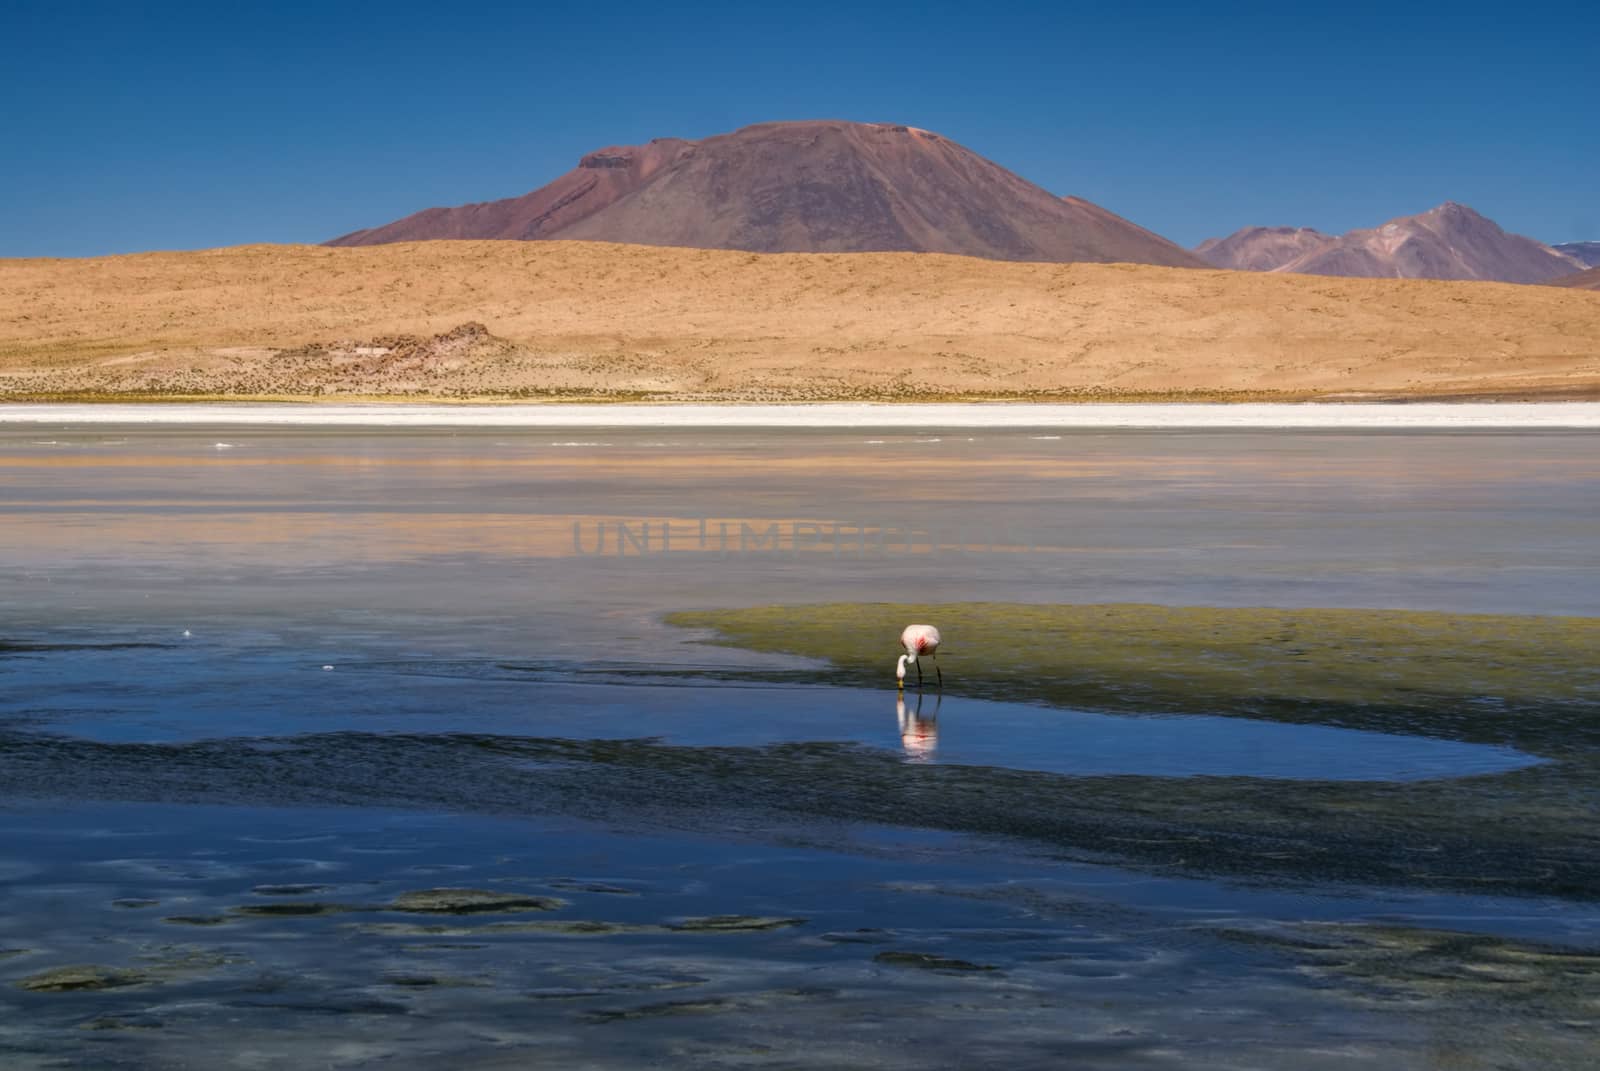 Flamingo in picturesque shallow lake in bolivian desert near Salar de Uyuni